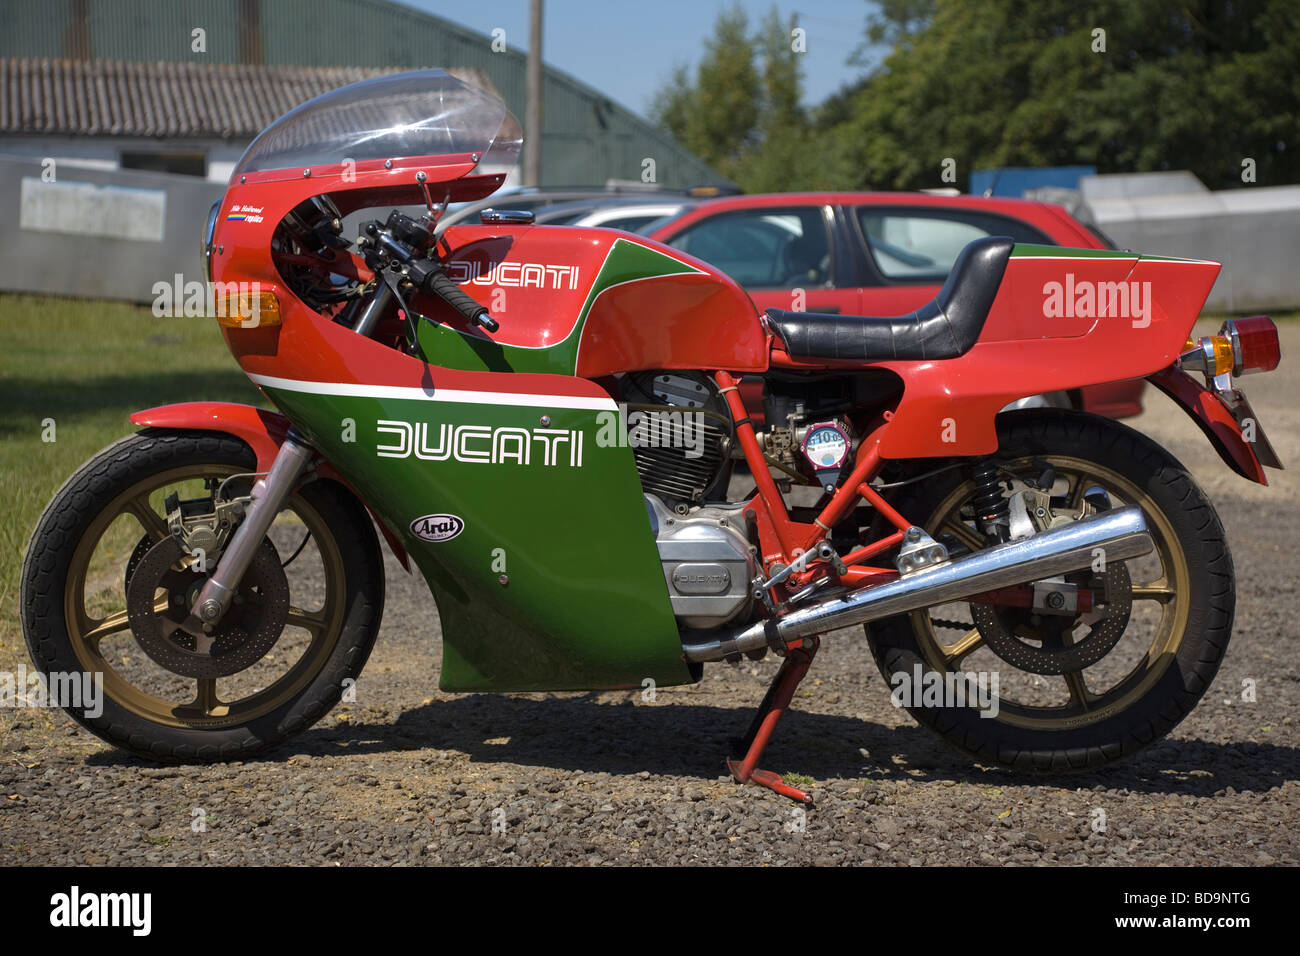 Mike Hailwood Replica Ducati motorcycle Stock Photo